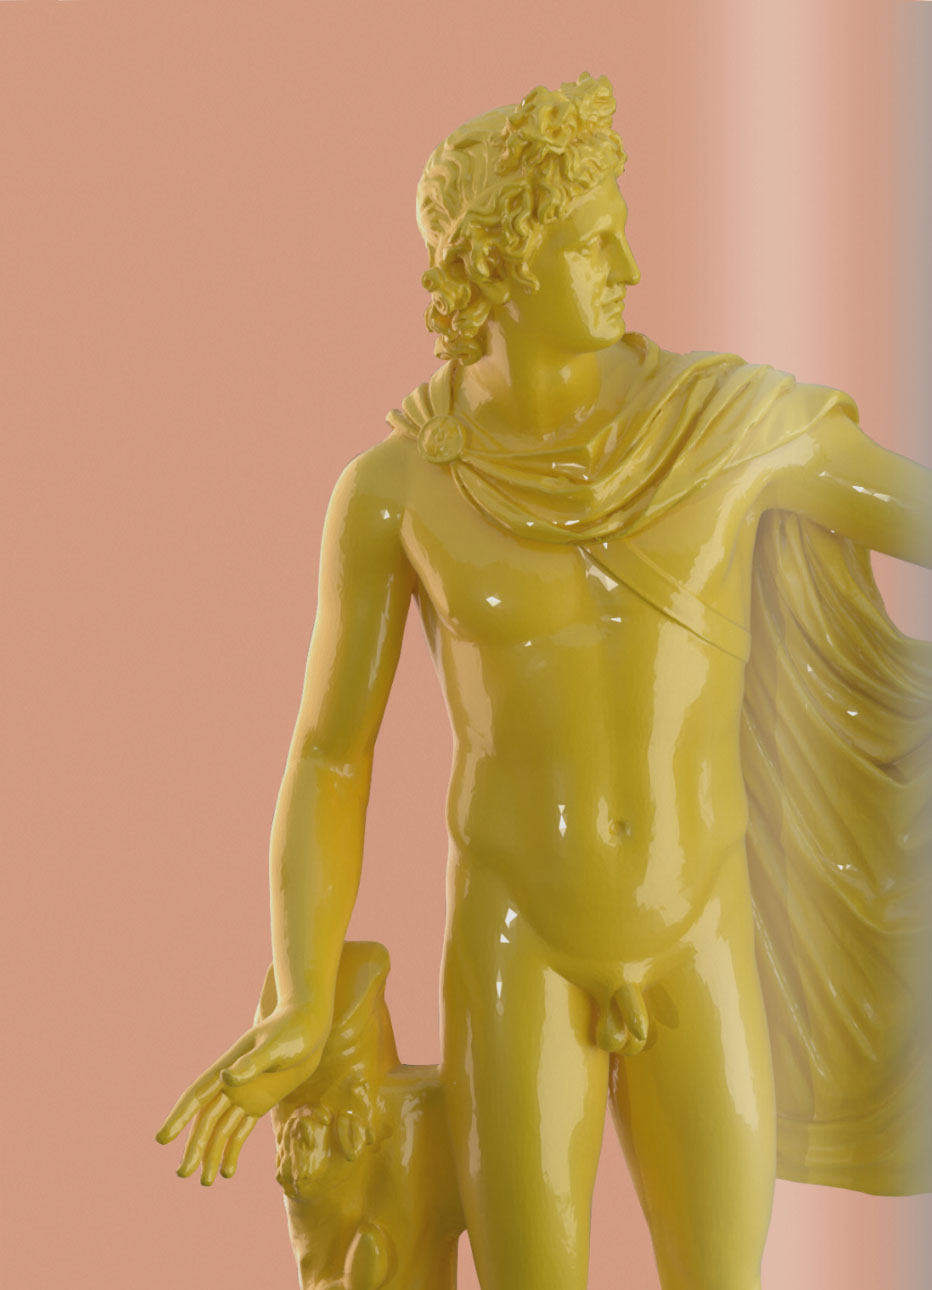 Golden Statue